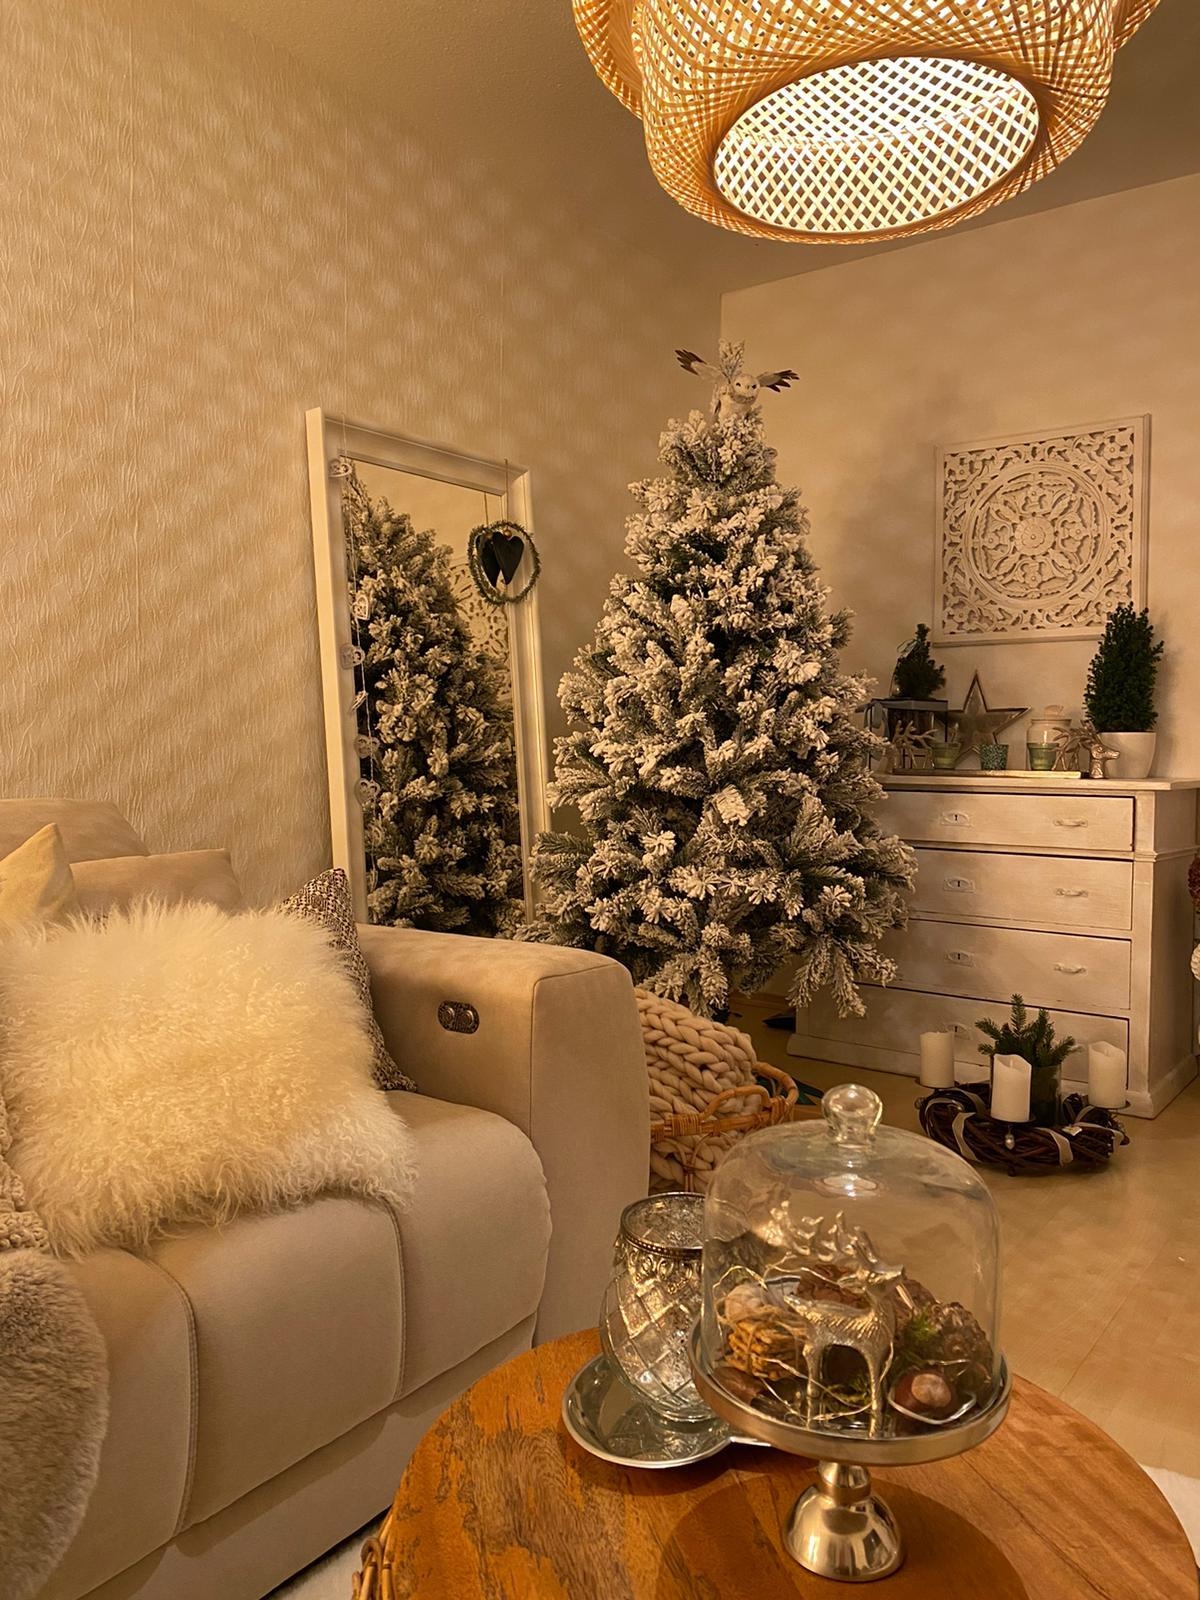 Weihnachtszauber ✨
#livingroom #landhausstil #bohostyle #shabbychic #christmas #couchliebt #couchmagazin 